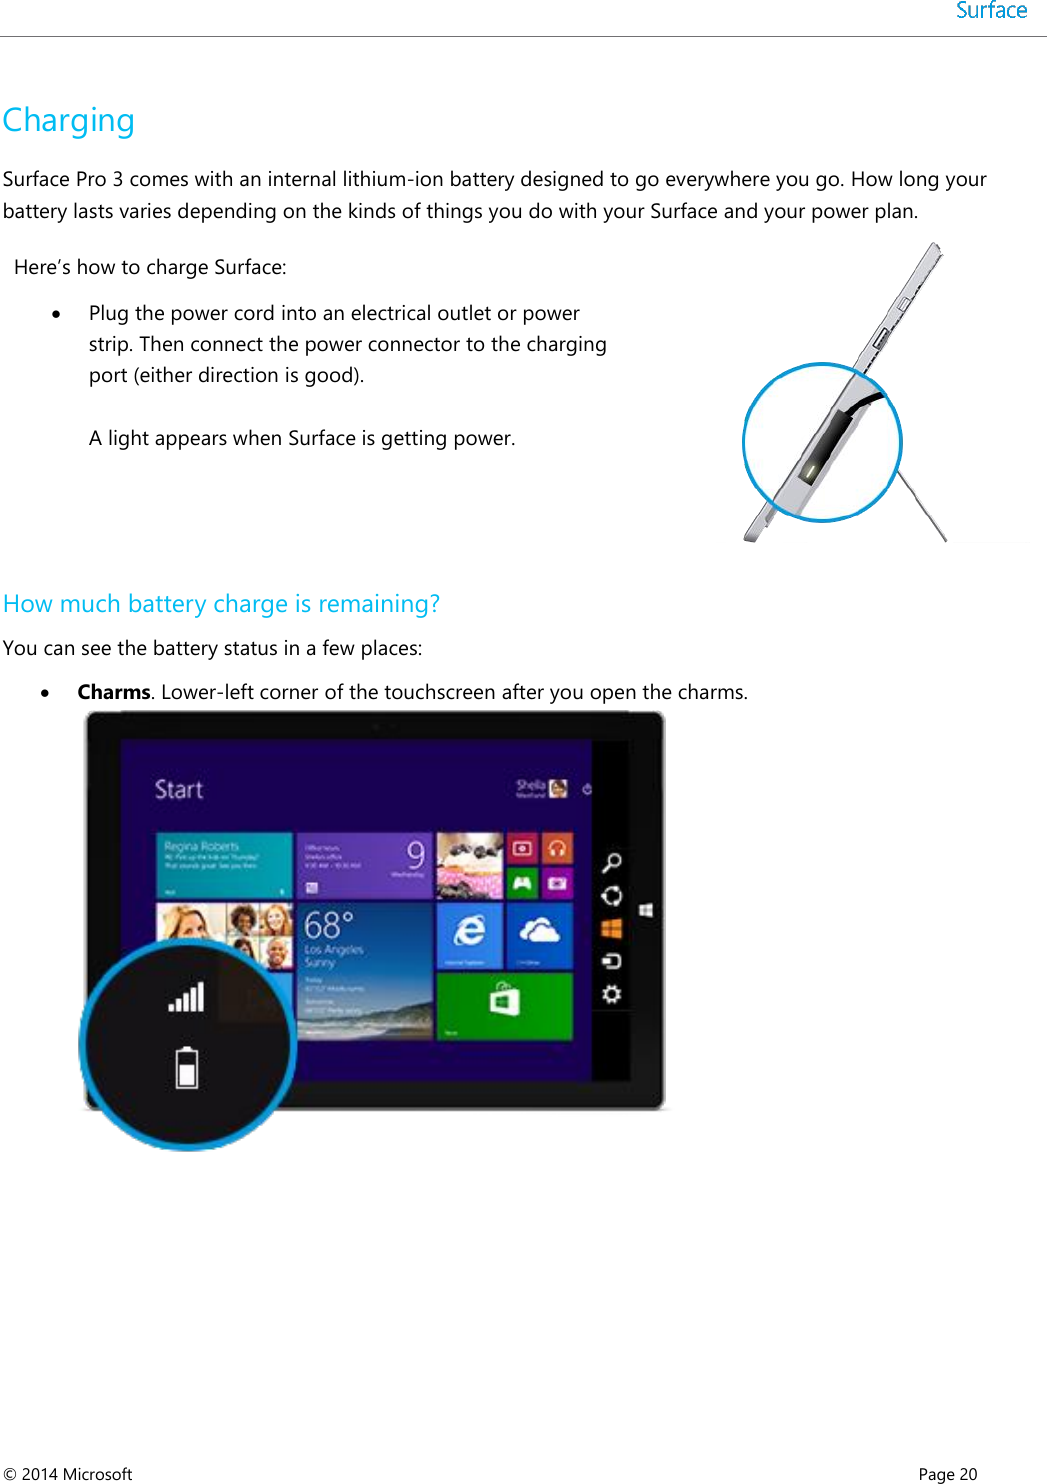 Microsoft Surface Pro 3 User Manual Pdf